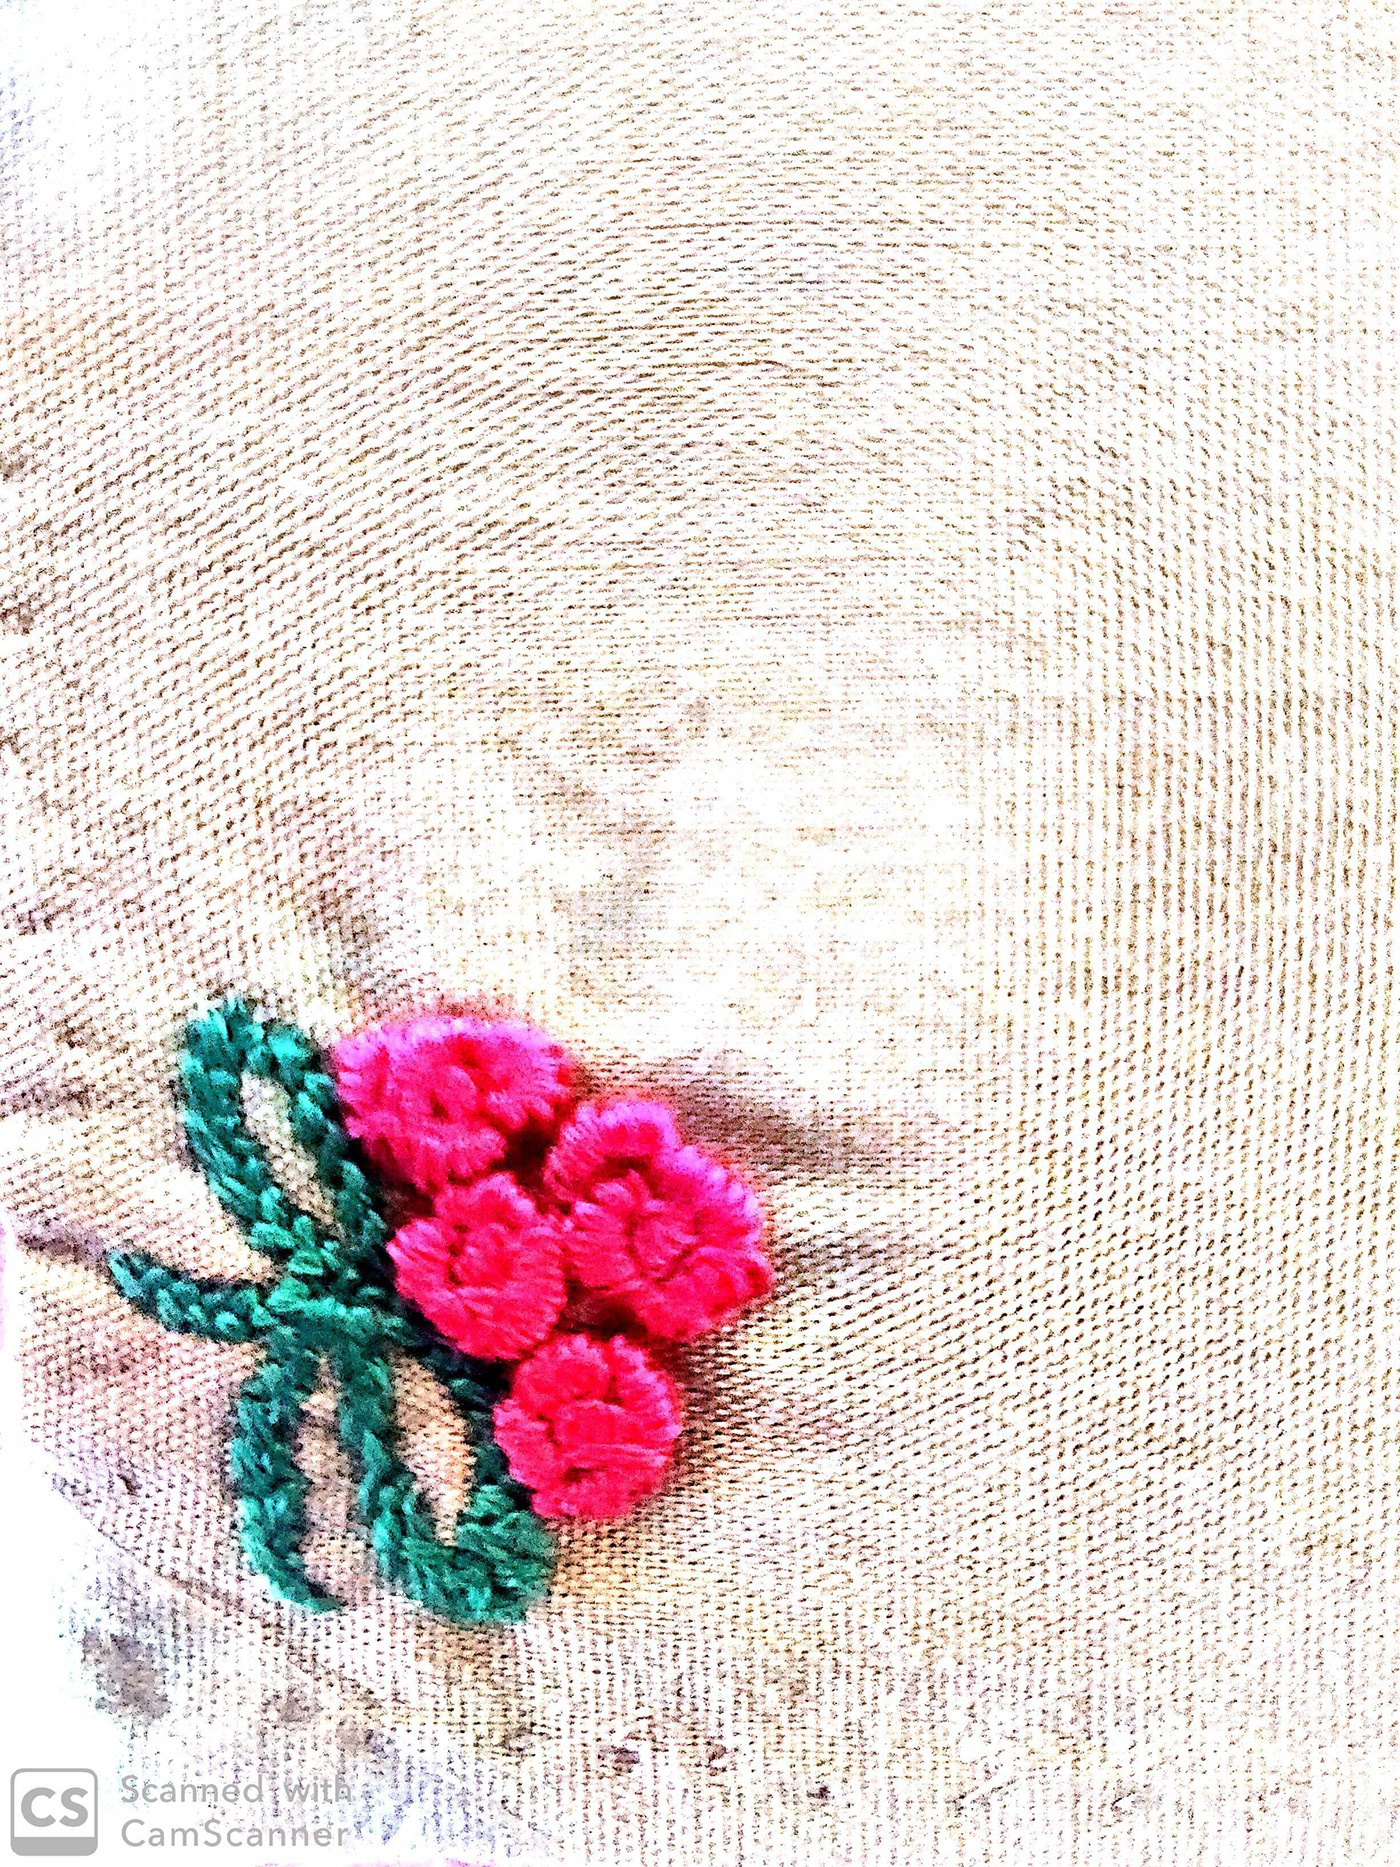 Embroidery handskills textile